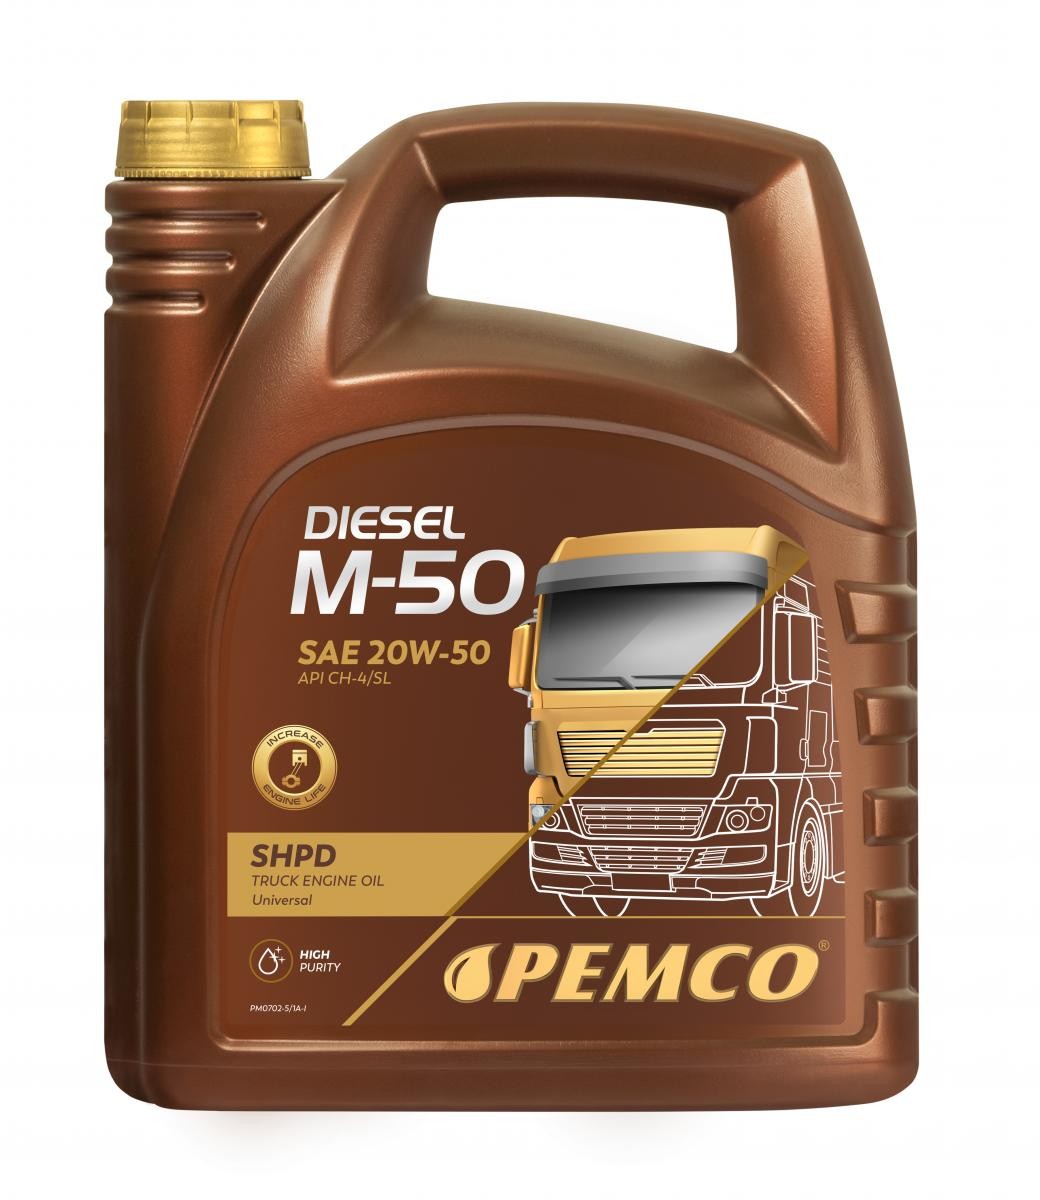 Car oil PEMCO 20W-50, 5l, Mineral Oil longlife PM0702-5